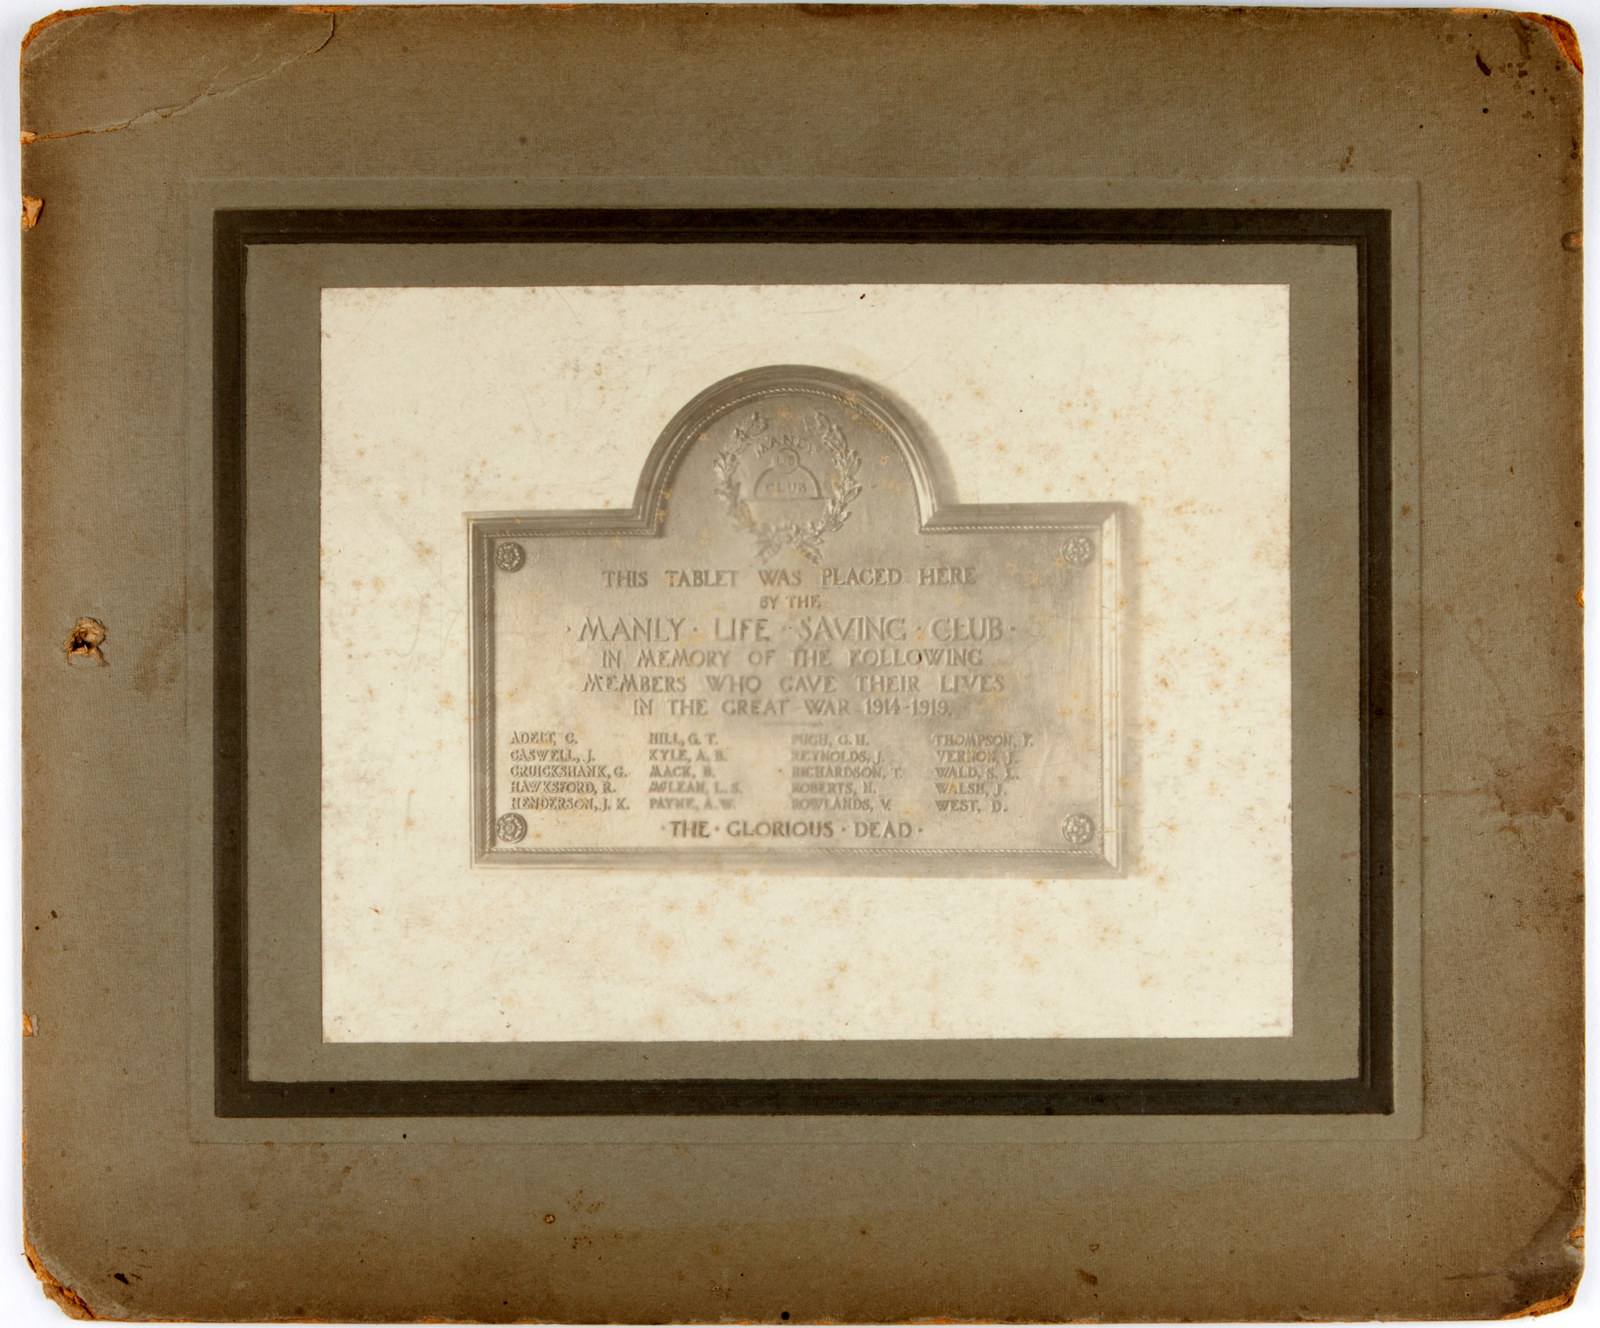 Mounted photograph of Manly Life Saving Club World War I memorial, c1923